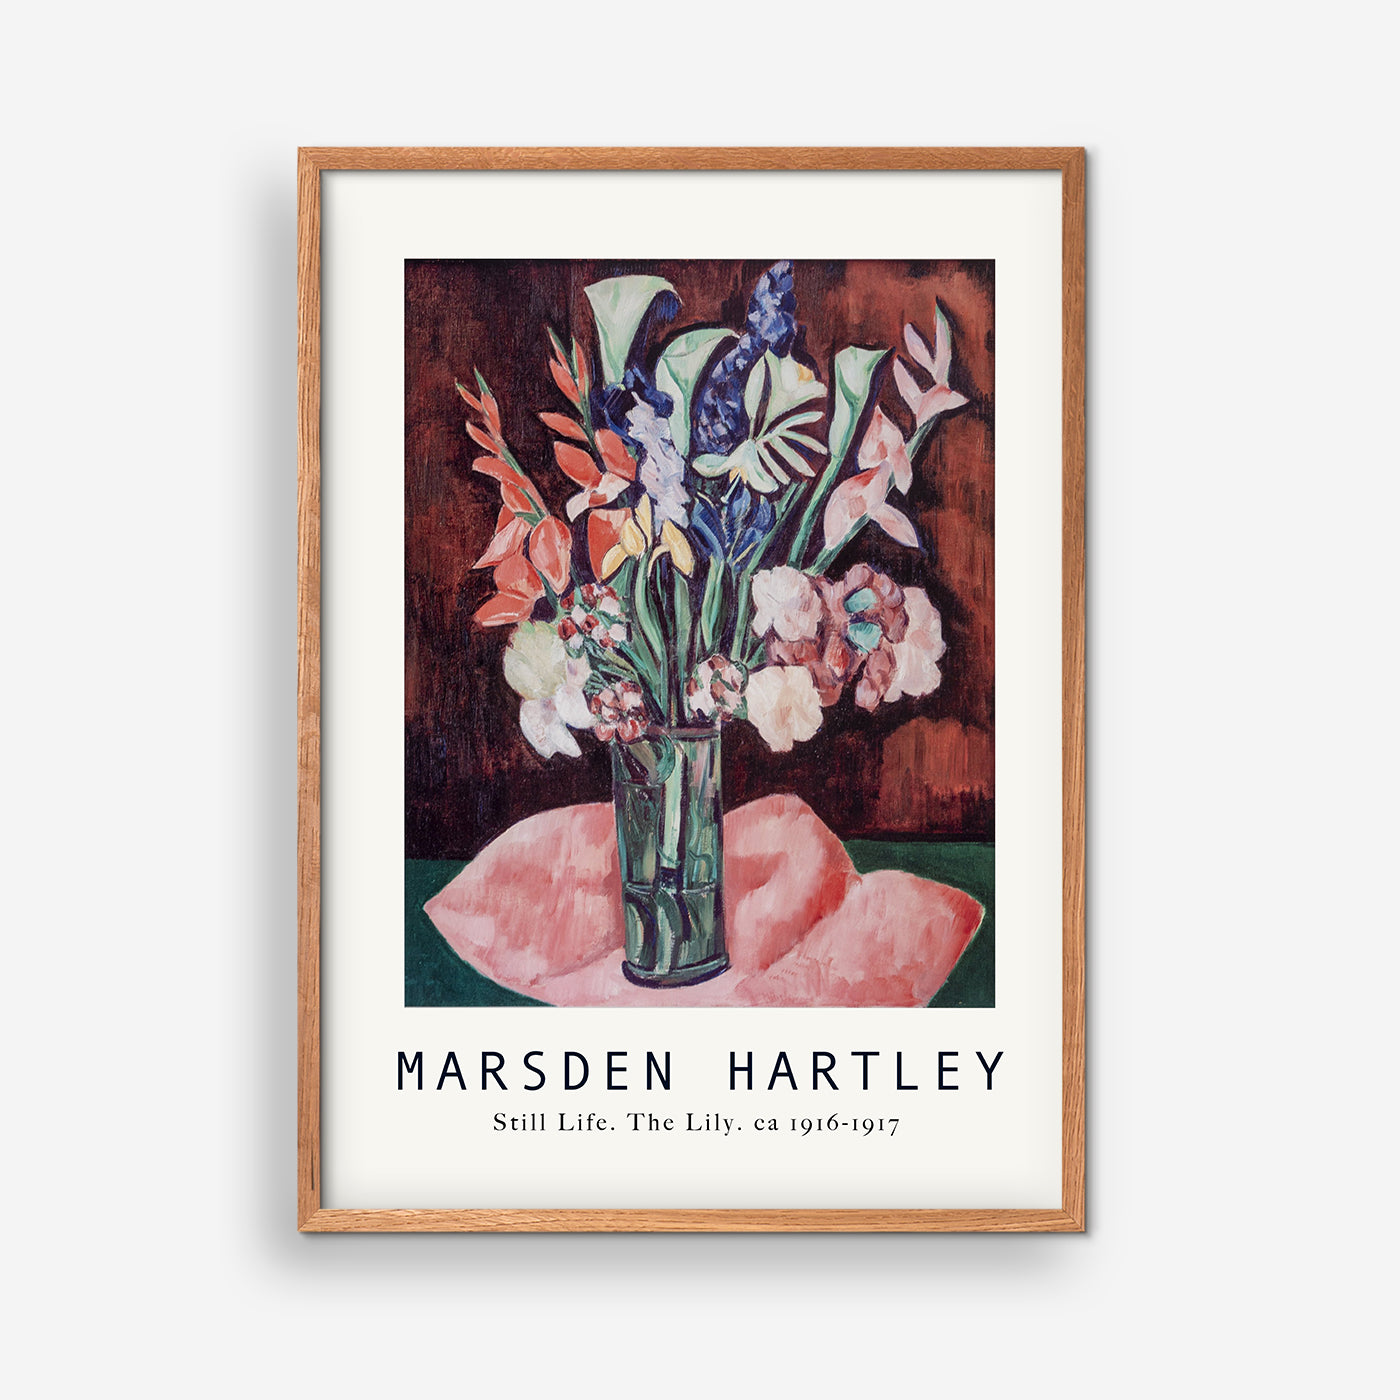 Still Life. The Lilly approx. 1916-1917 - Marsden Hartley